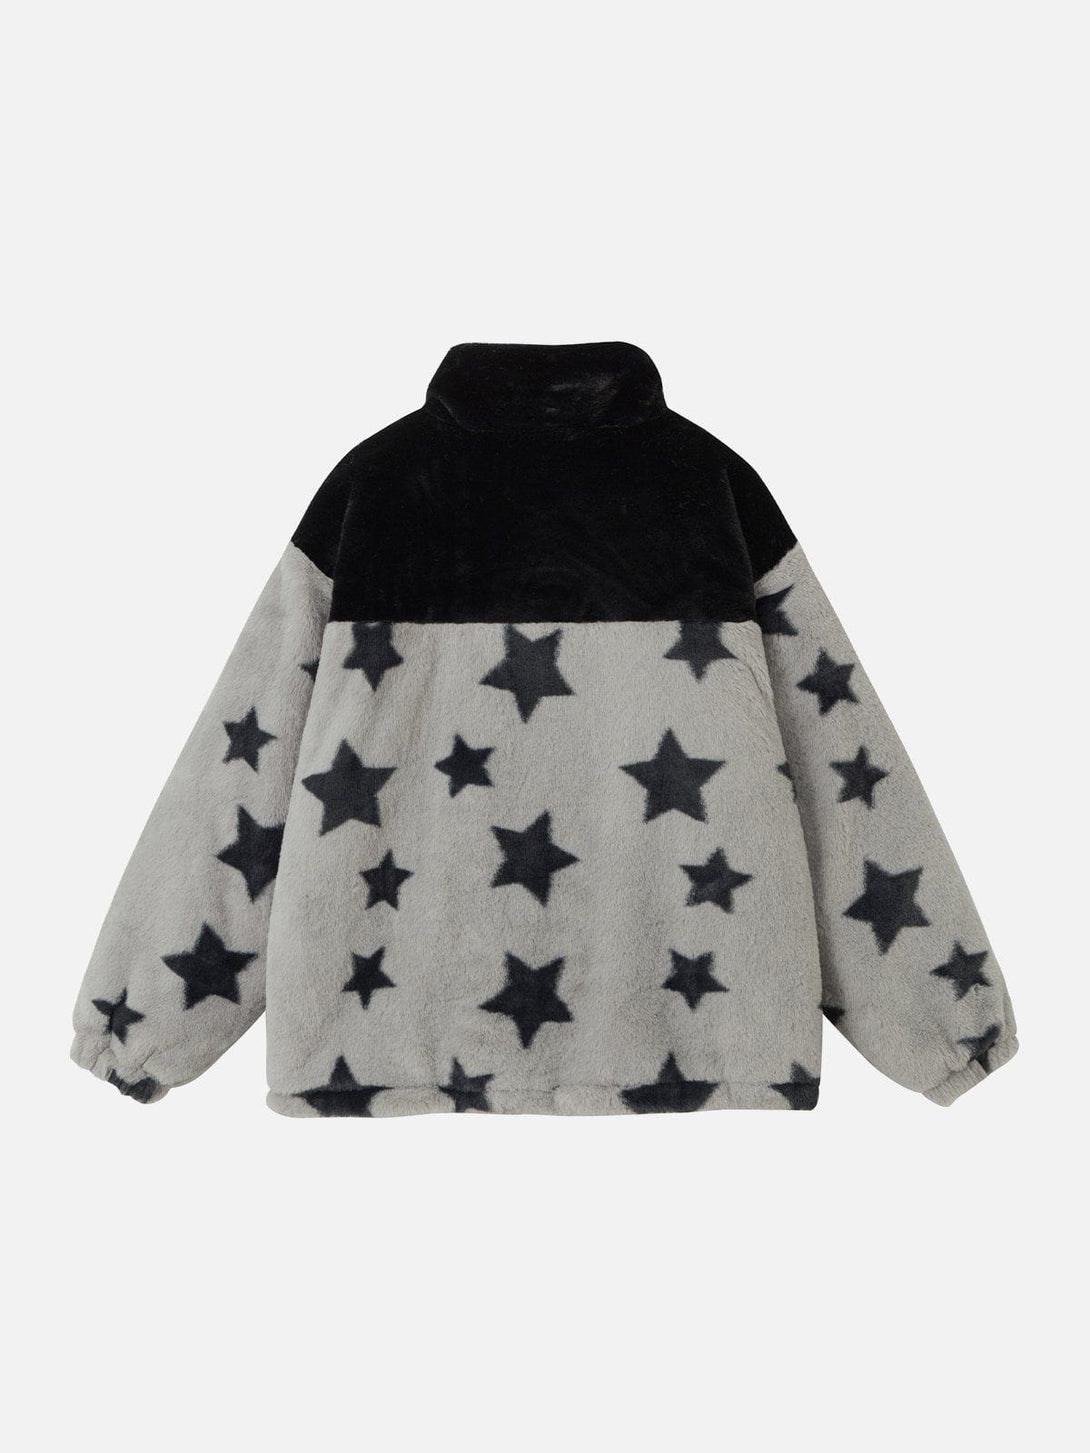 Levefly - Star Panel Sherpa Winter Coat - Streetwear Fashion - levefly.com